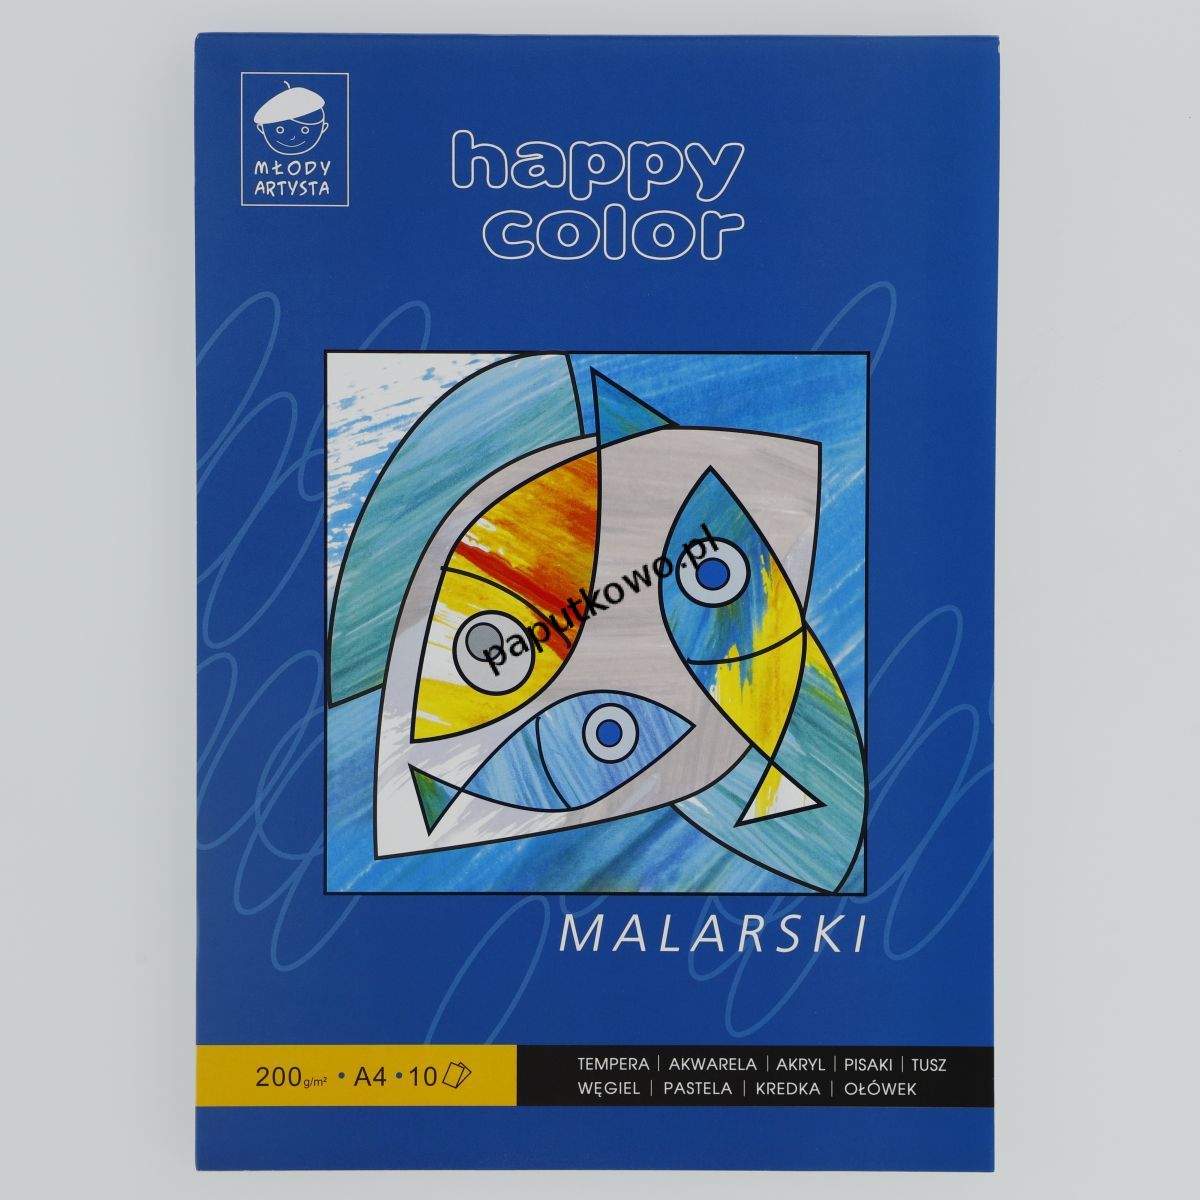 Blok artystyczny Gdd Happy Color blok malarski młody artysta A4 200g 10k 297×210 mm (HA 3720 2030 M10) 1